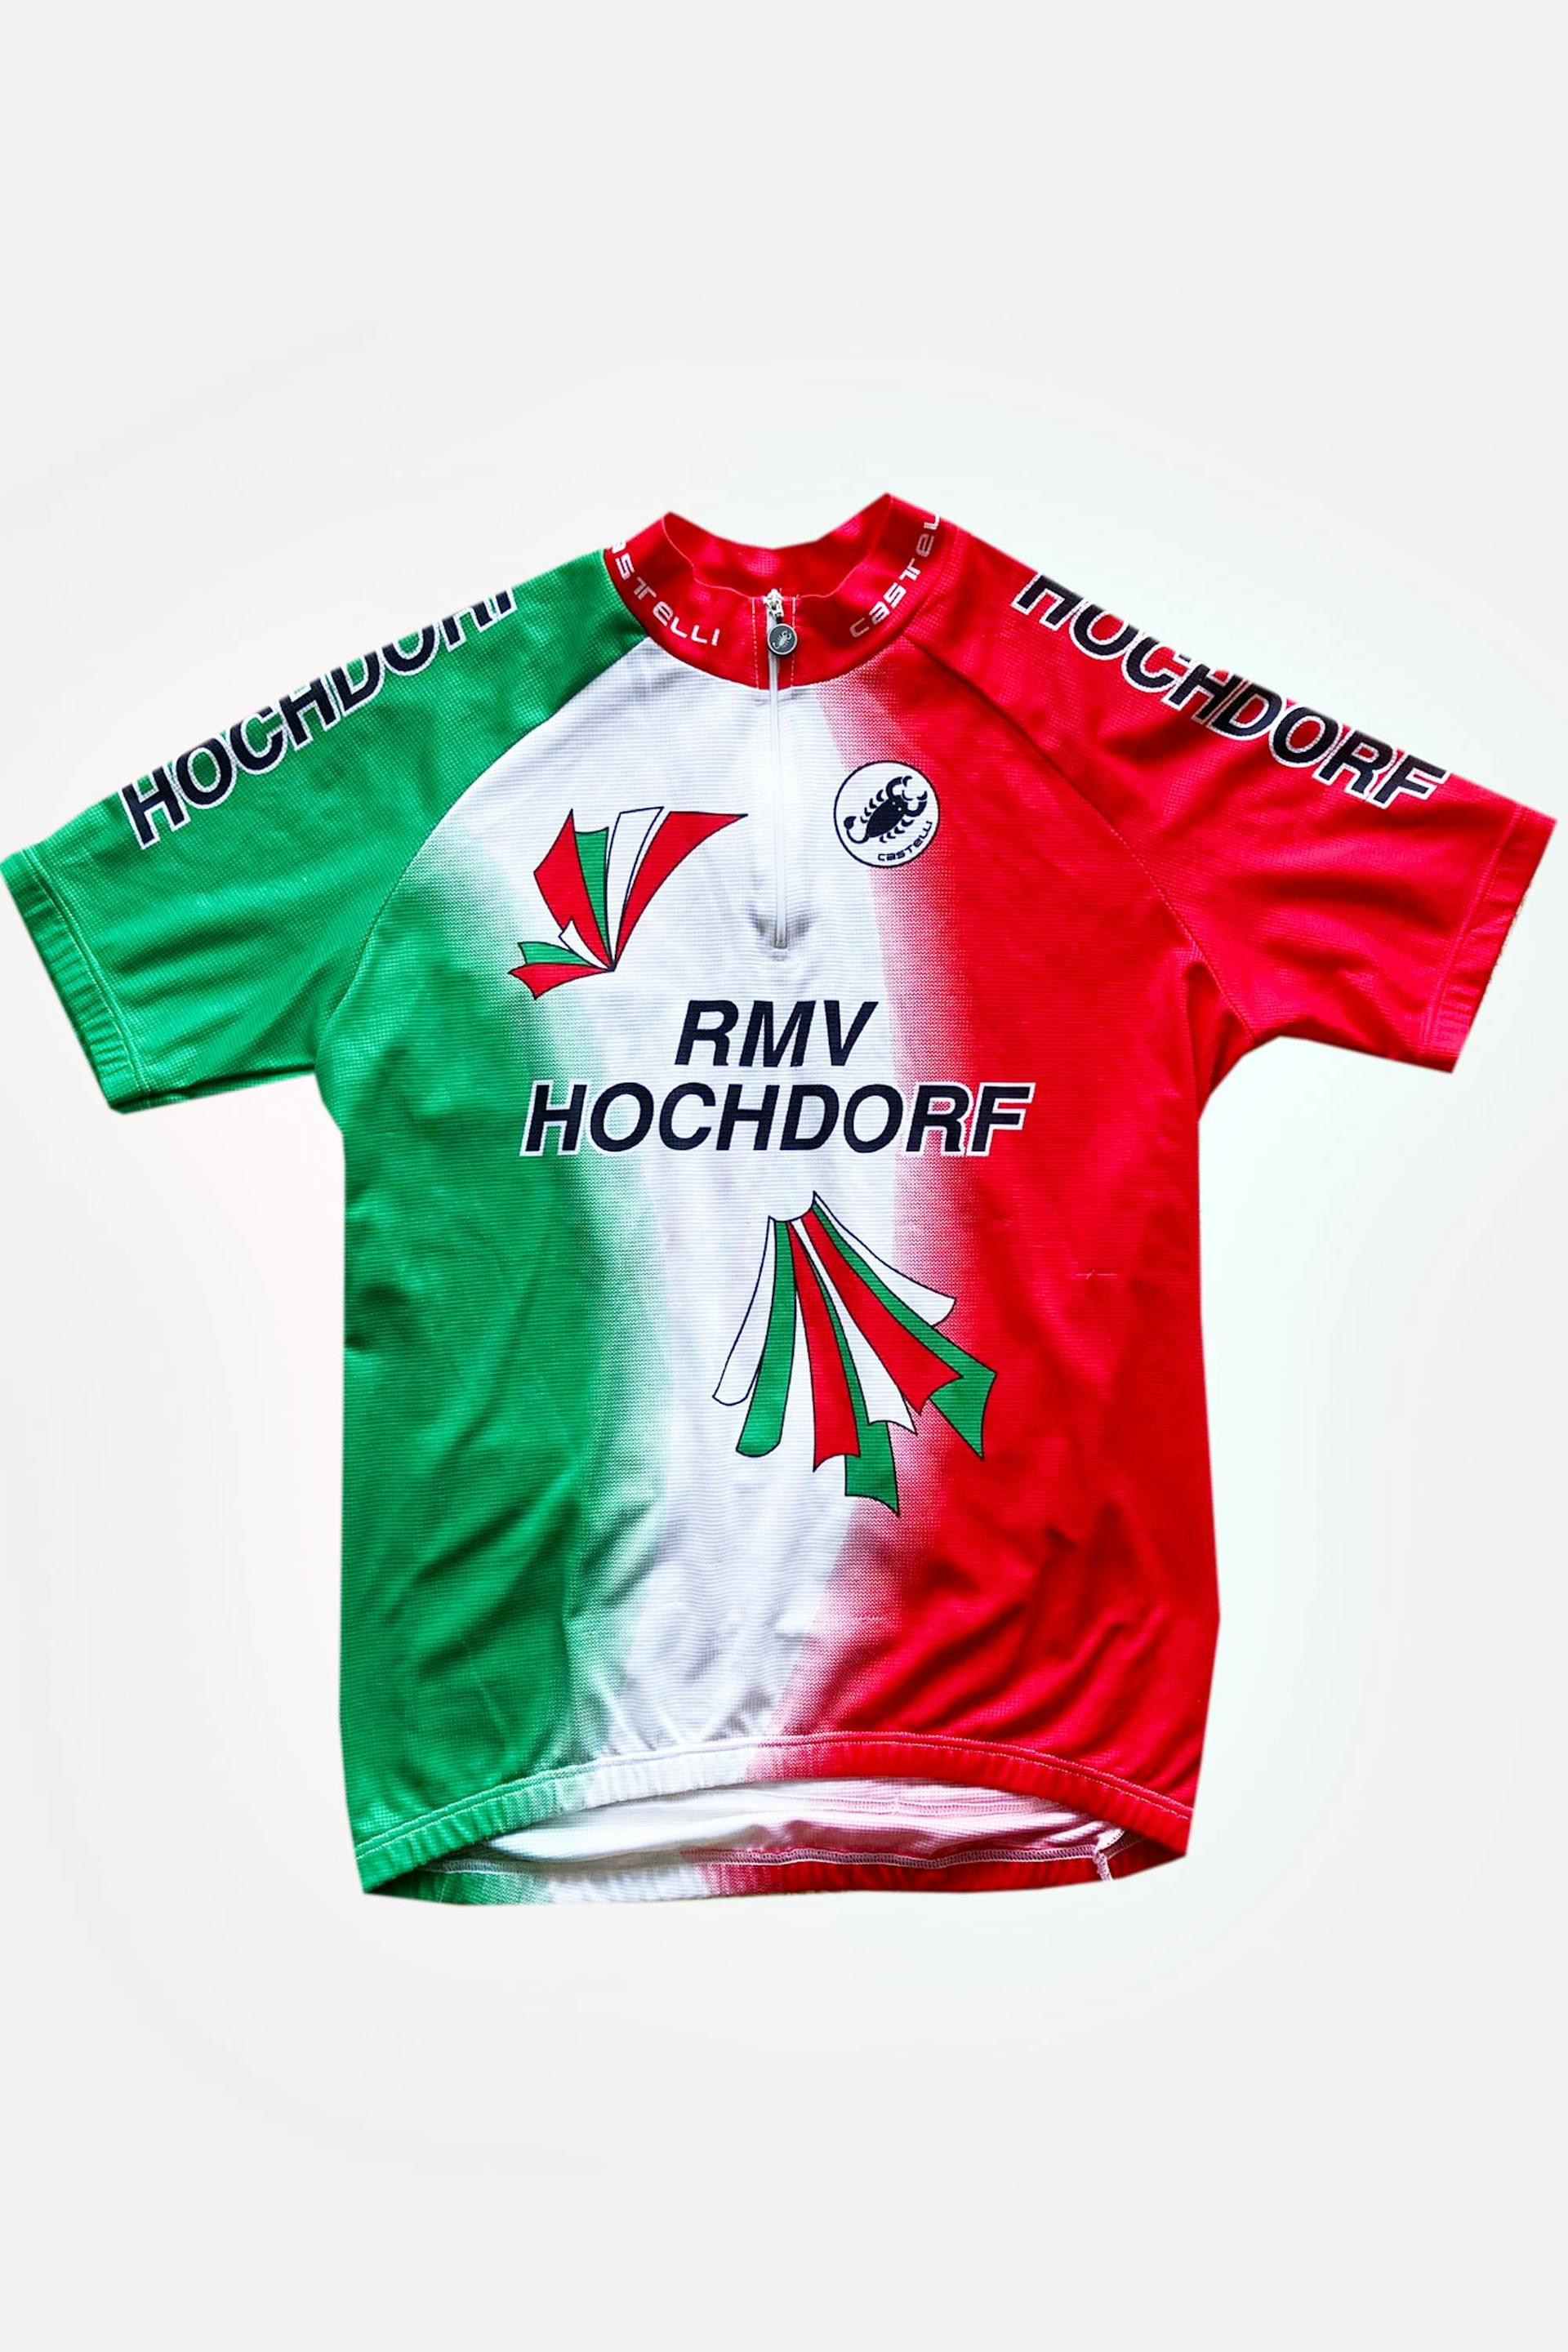 Castelli RMV Hochdorf Cycling Jersey